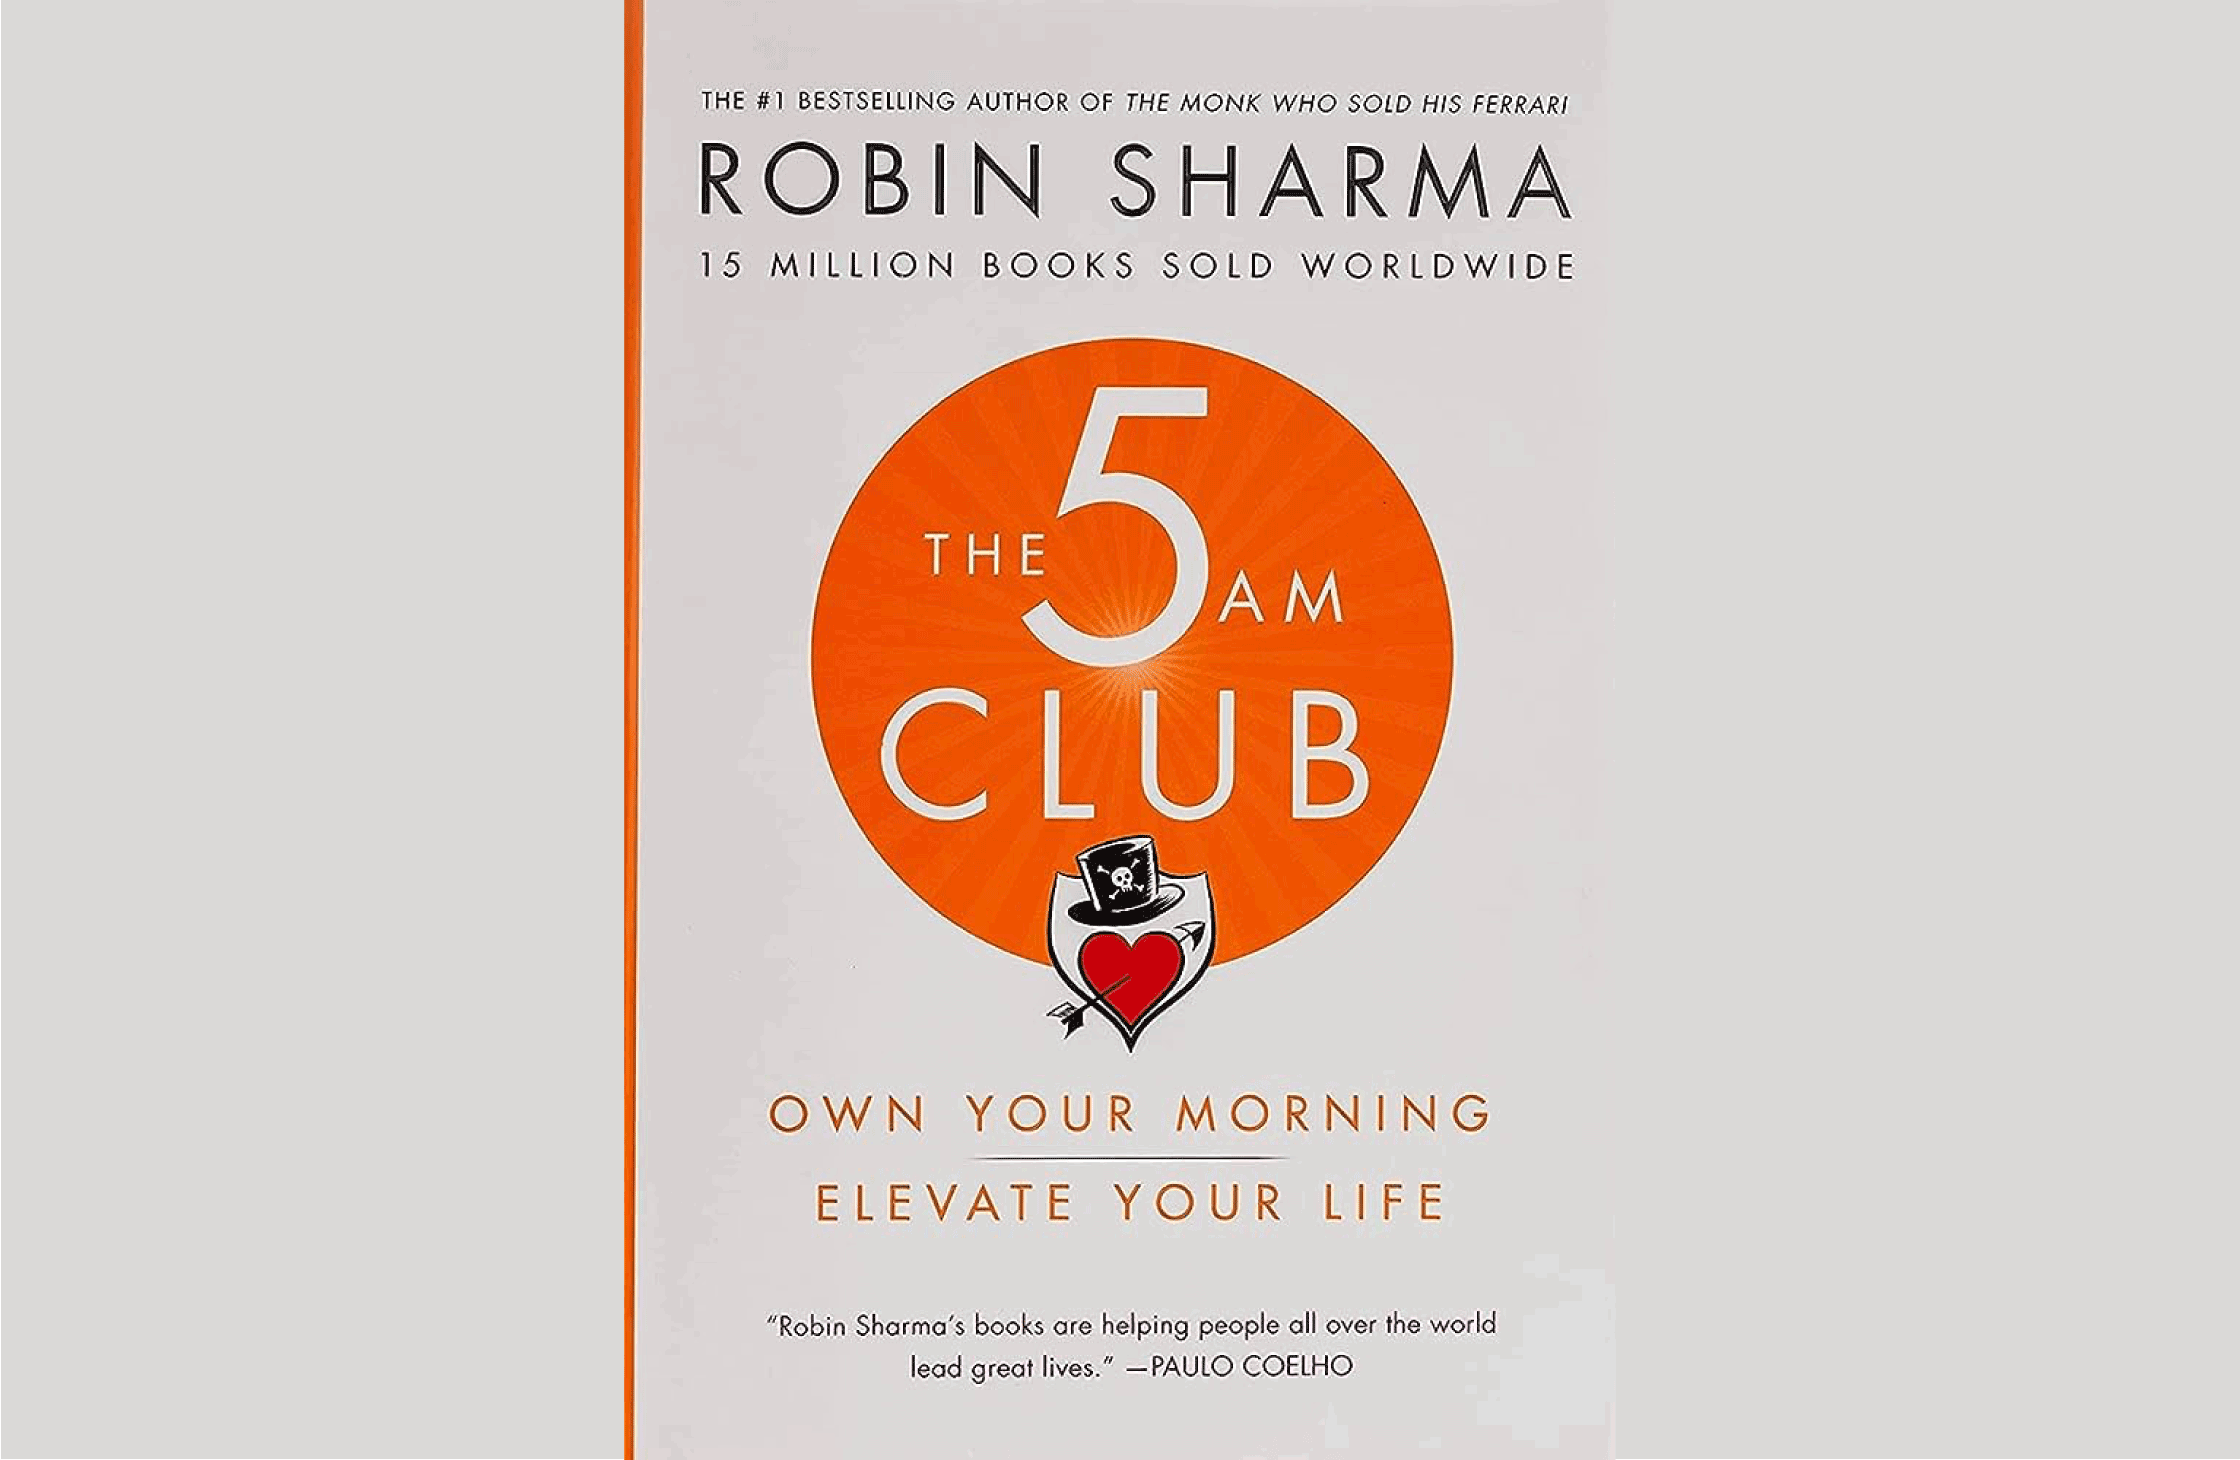 Summary: The 5 AM Club: Robin Sharma